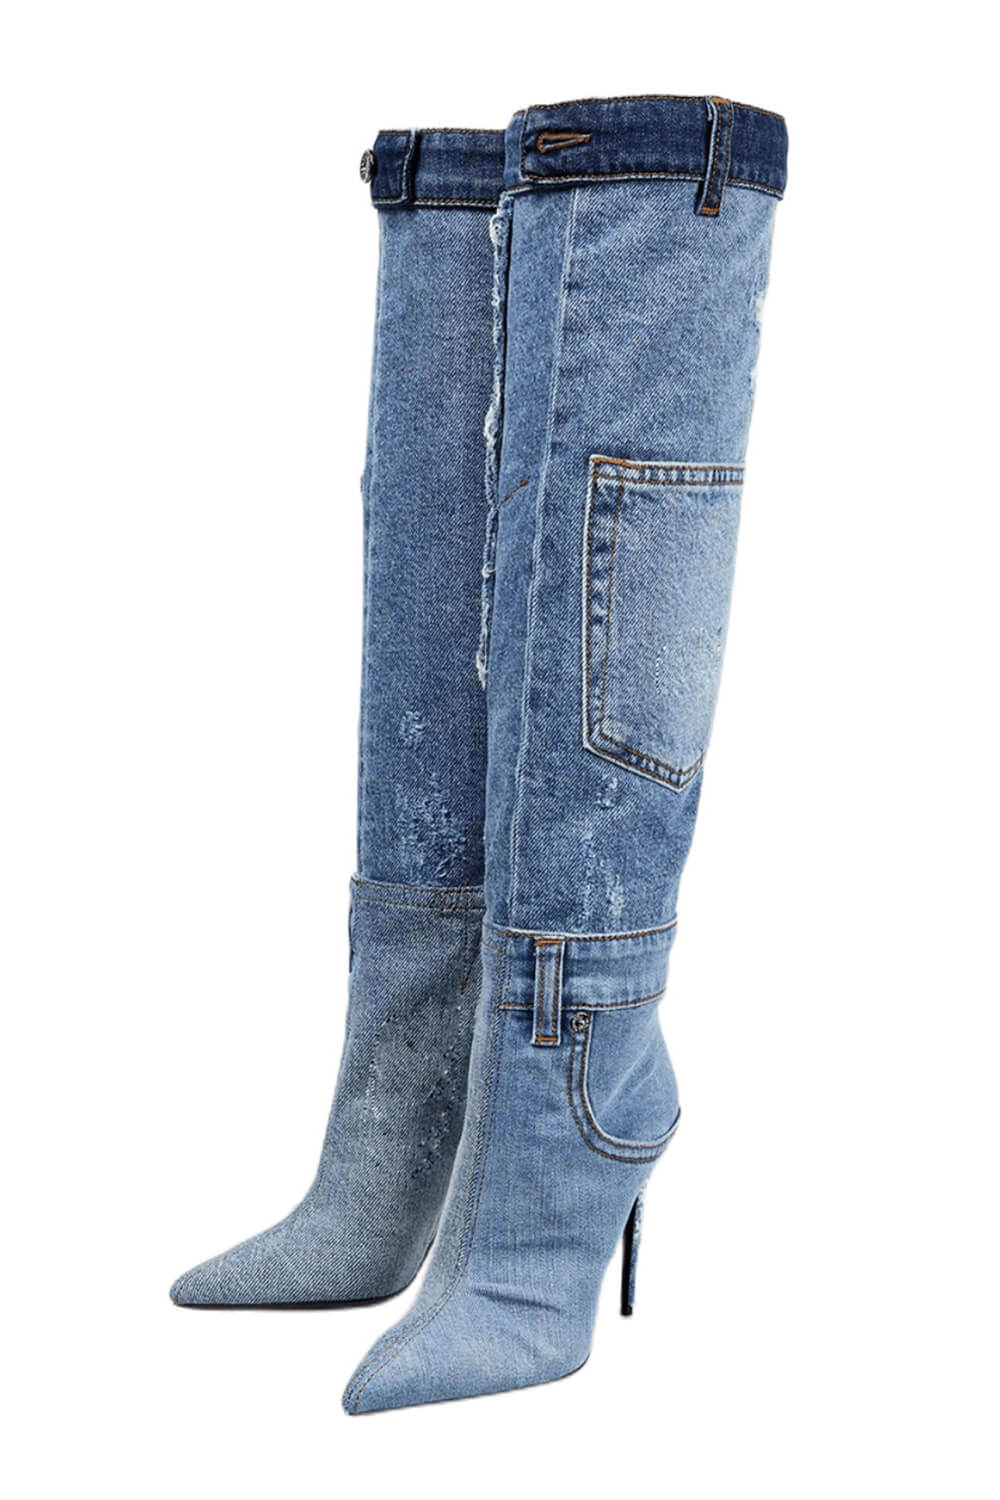 Patchwork Denim Knee-High Stiletto Heeled Boots With Pocket Details - Blue